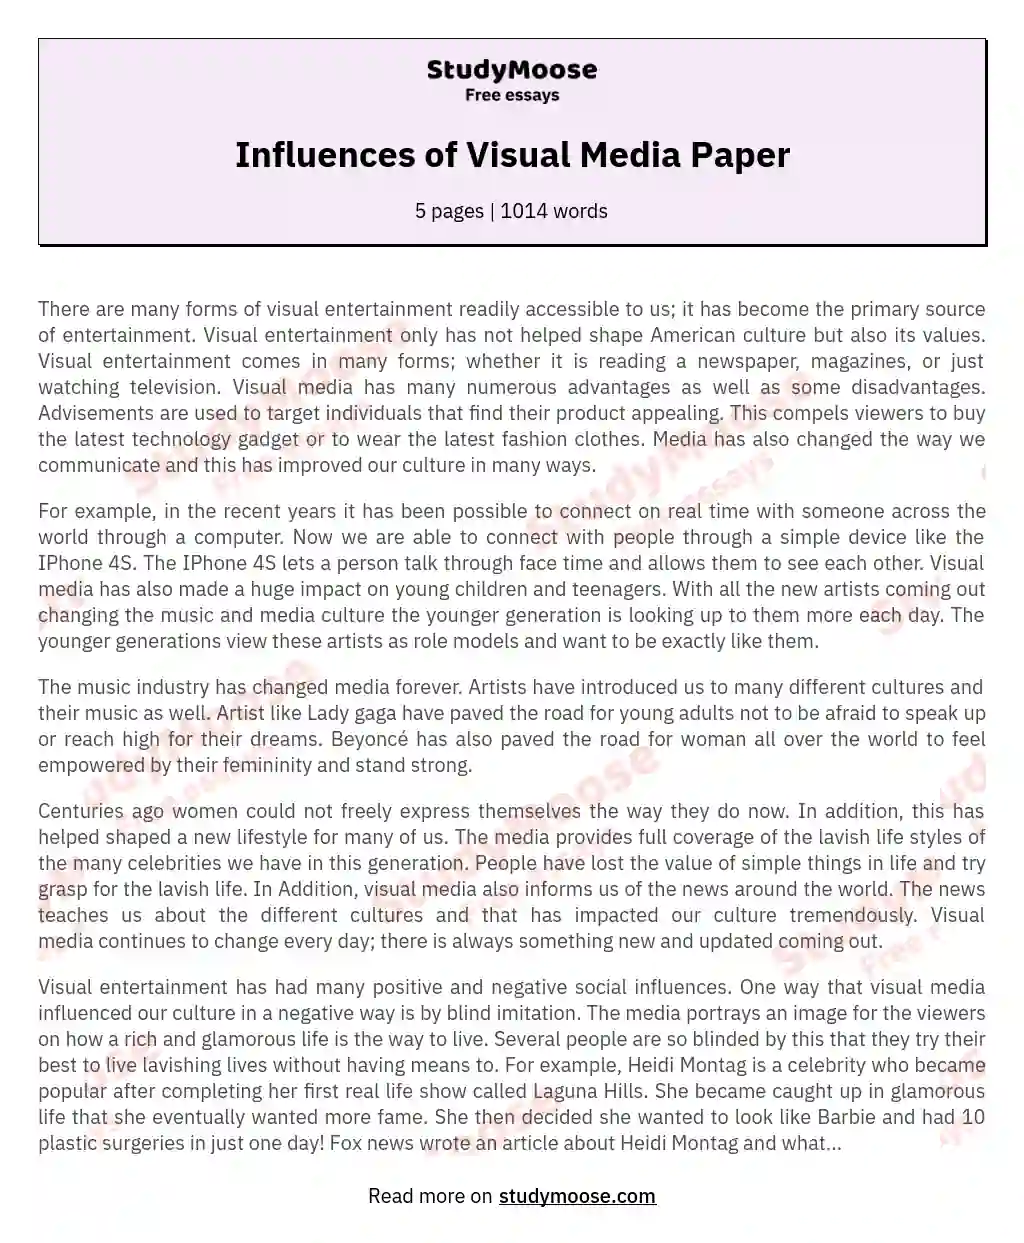 Influences of Visual Media Paper